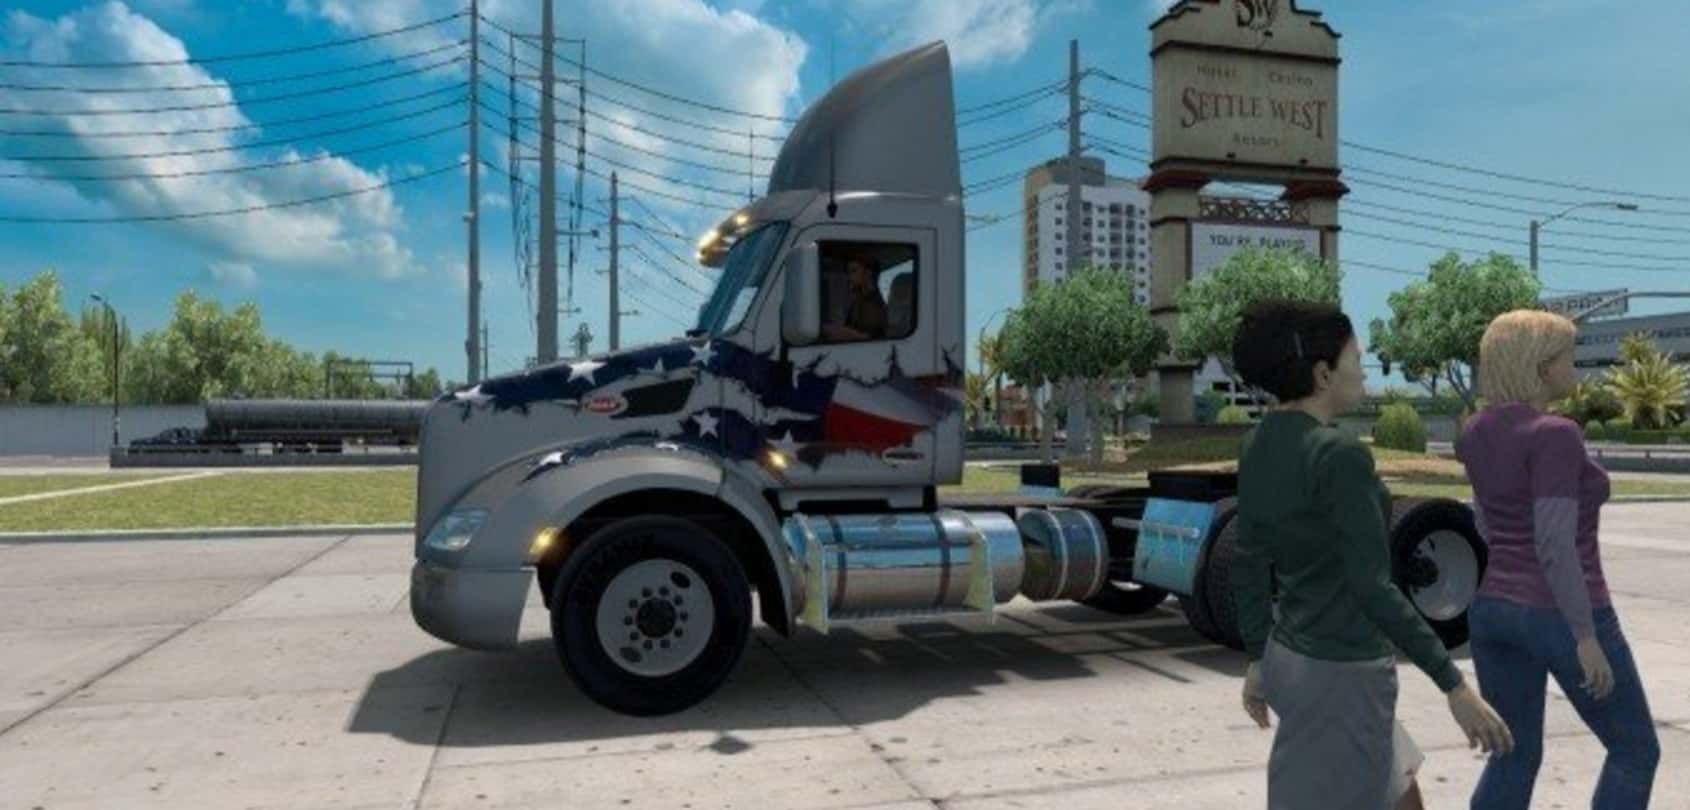 ats-money-cheat-skin-for-ats-american-truck-simulator-mod-ats-mod